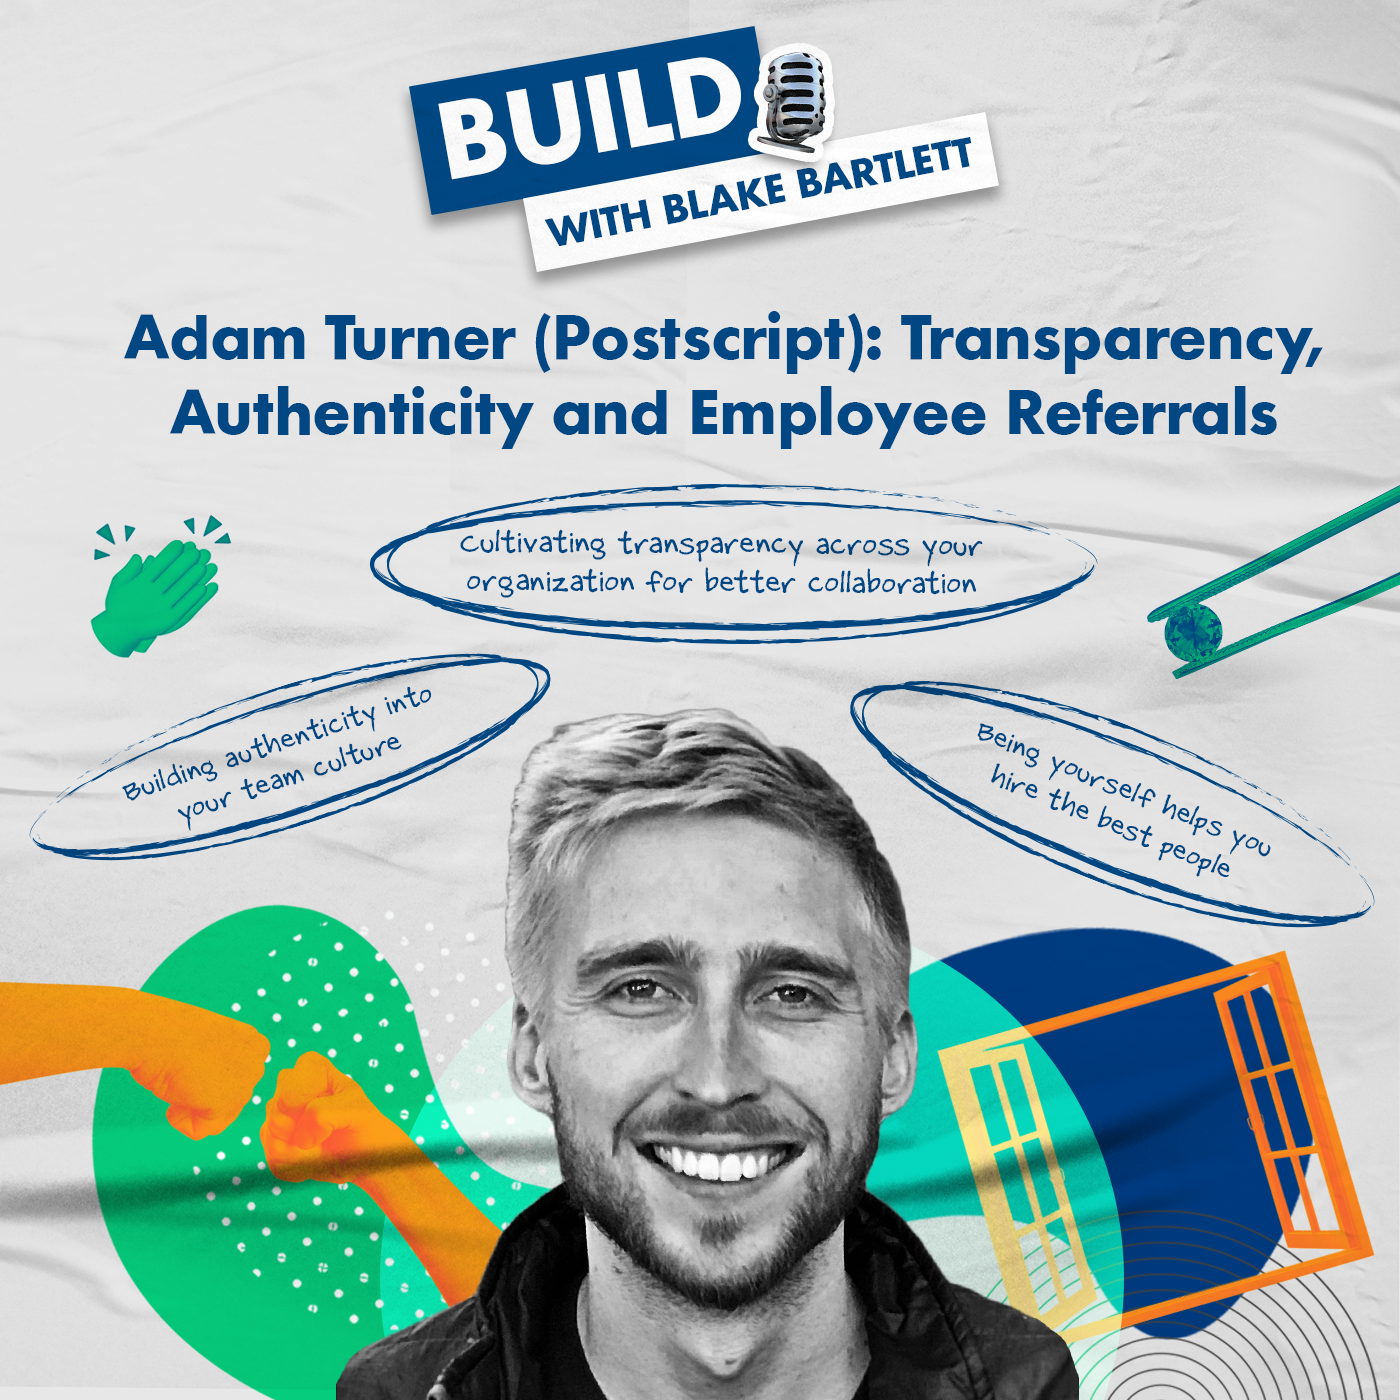 Adam Turner (Postscript): Transparency, Authenticity and Employee Referrals